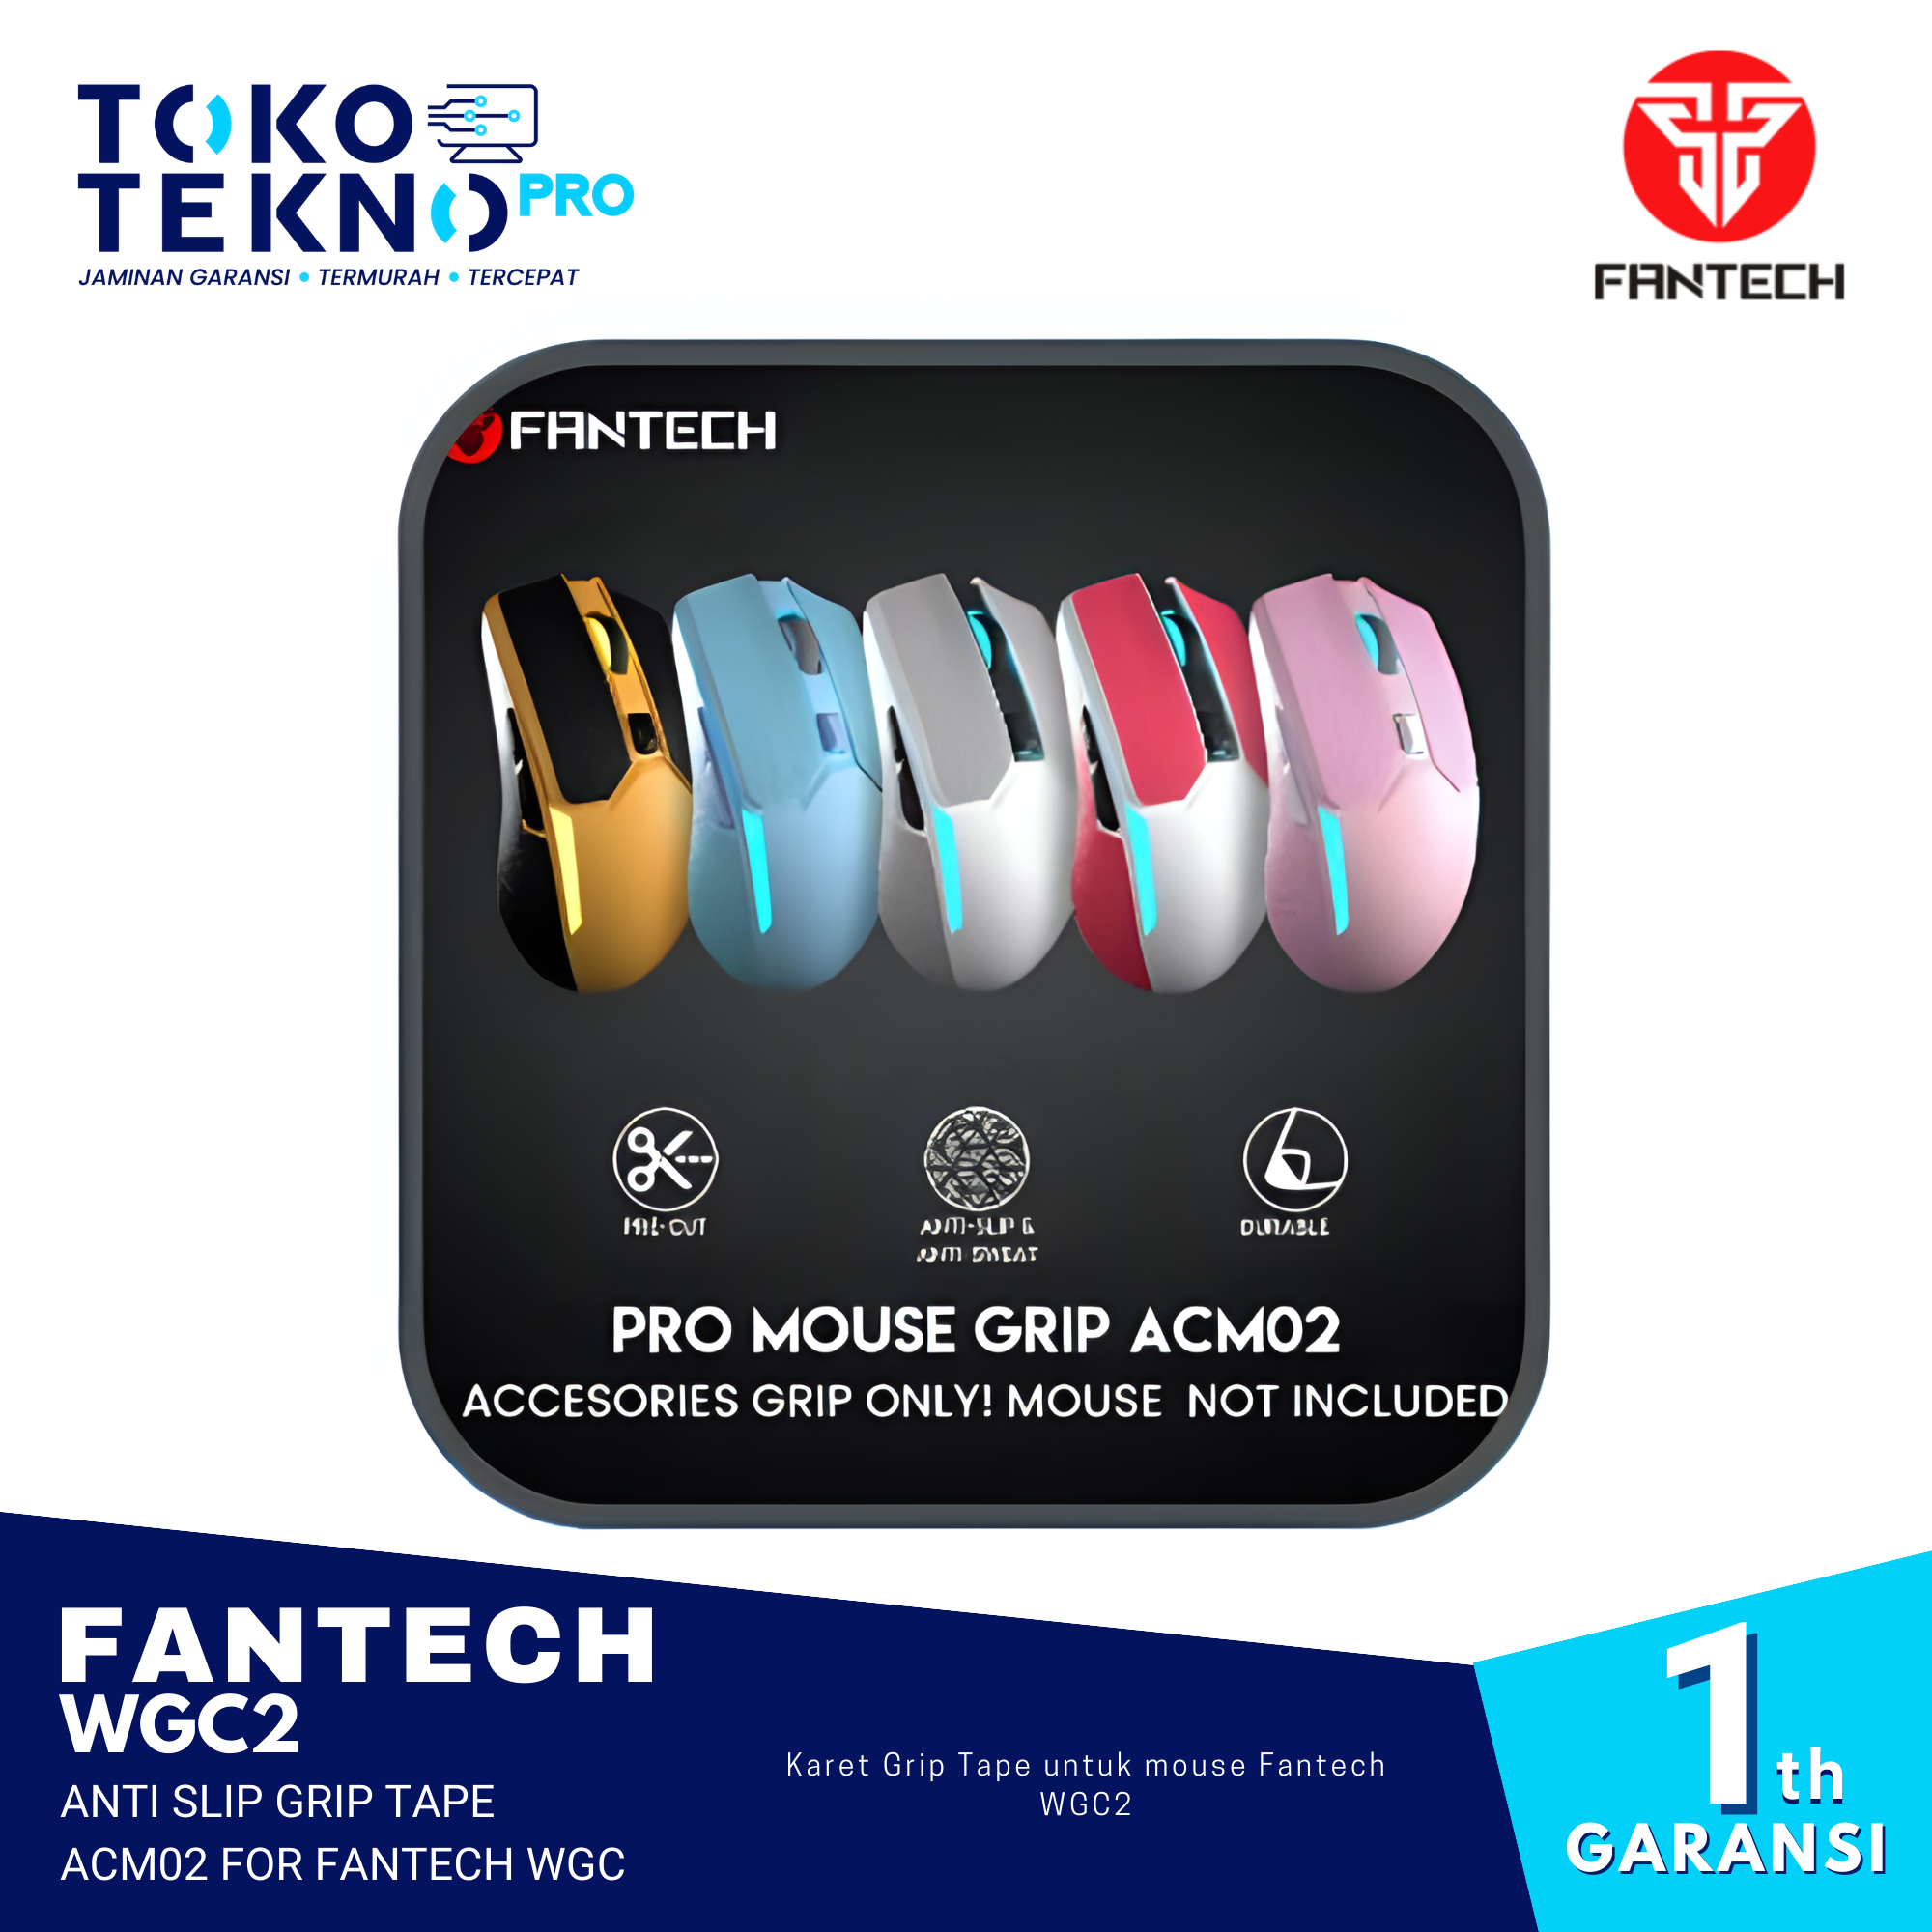 Fantech WGC2 Anti Slip Grip Tape ACM02 For Fantech WGC Wireless Mouse